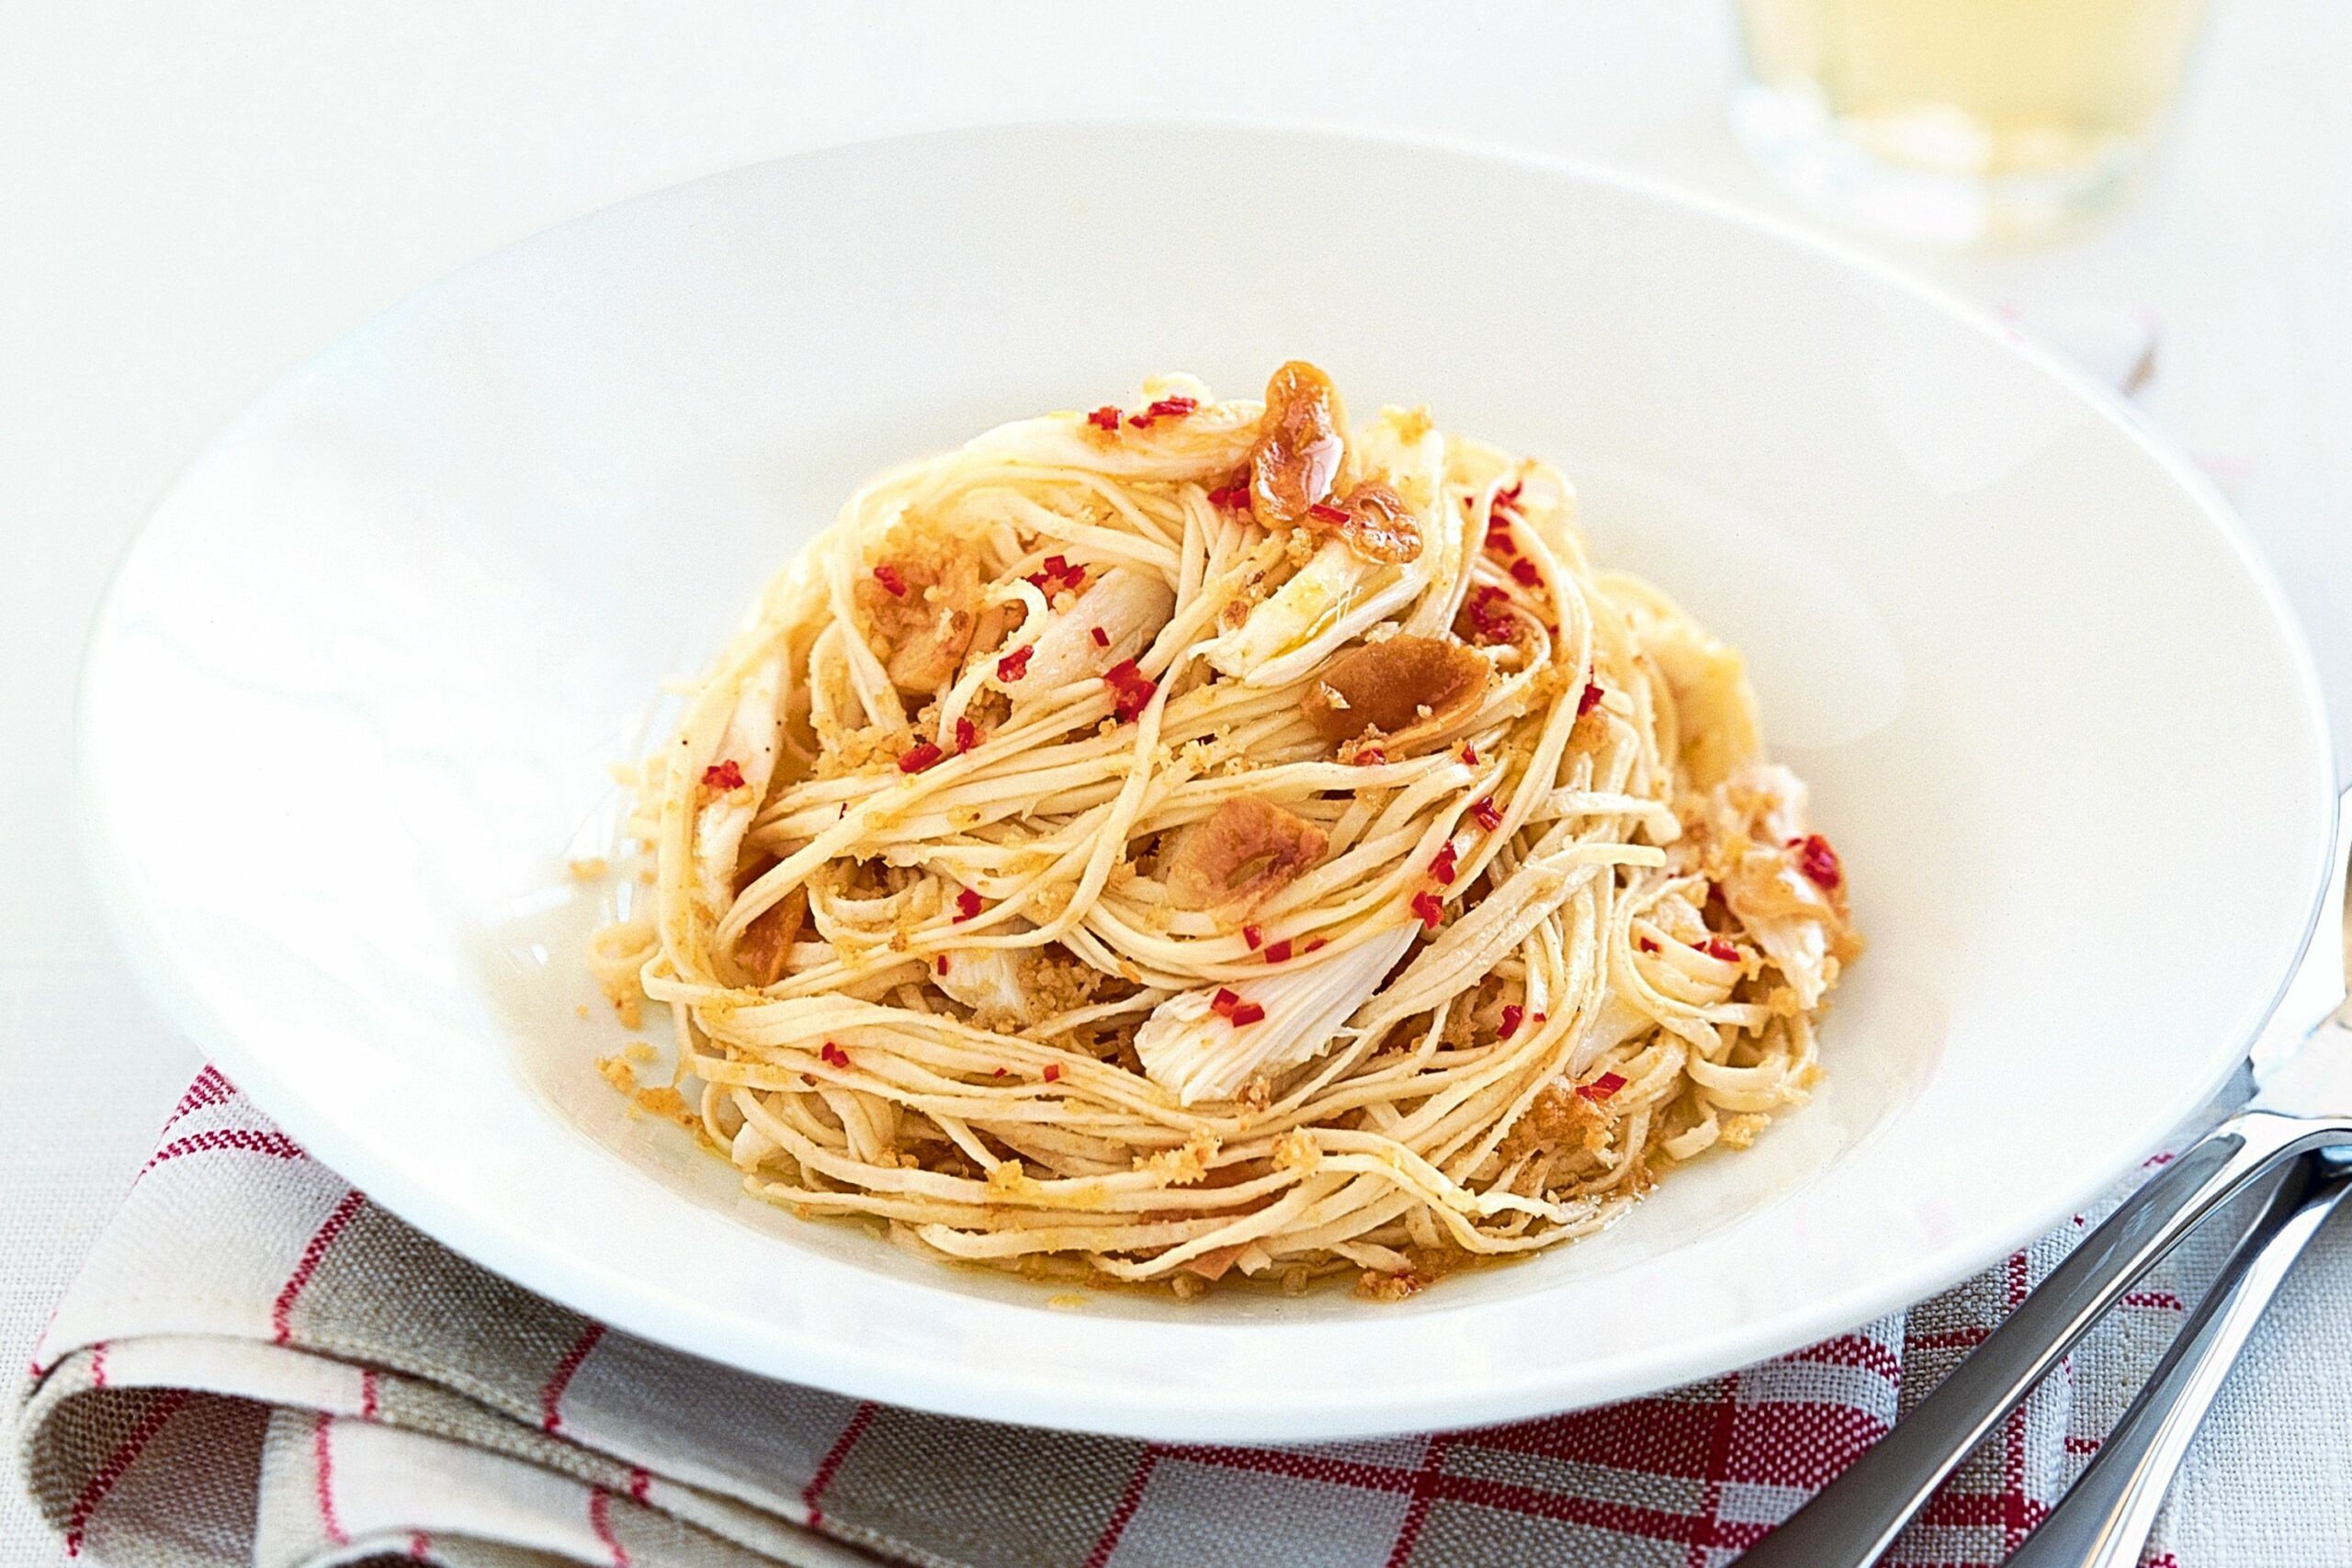 Spaghetti with garlic